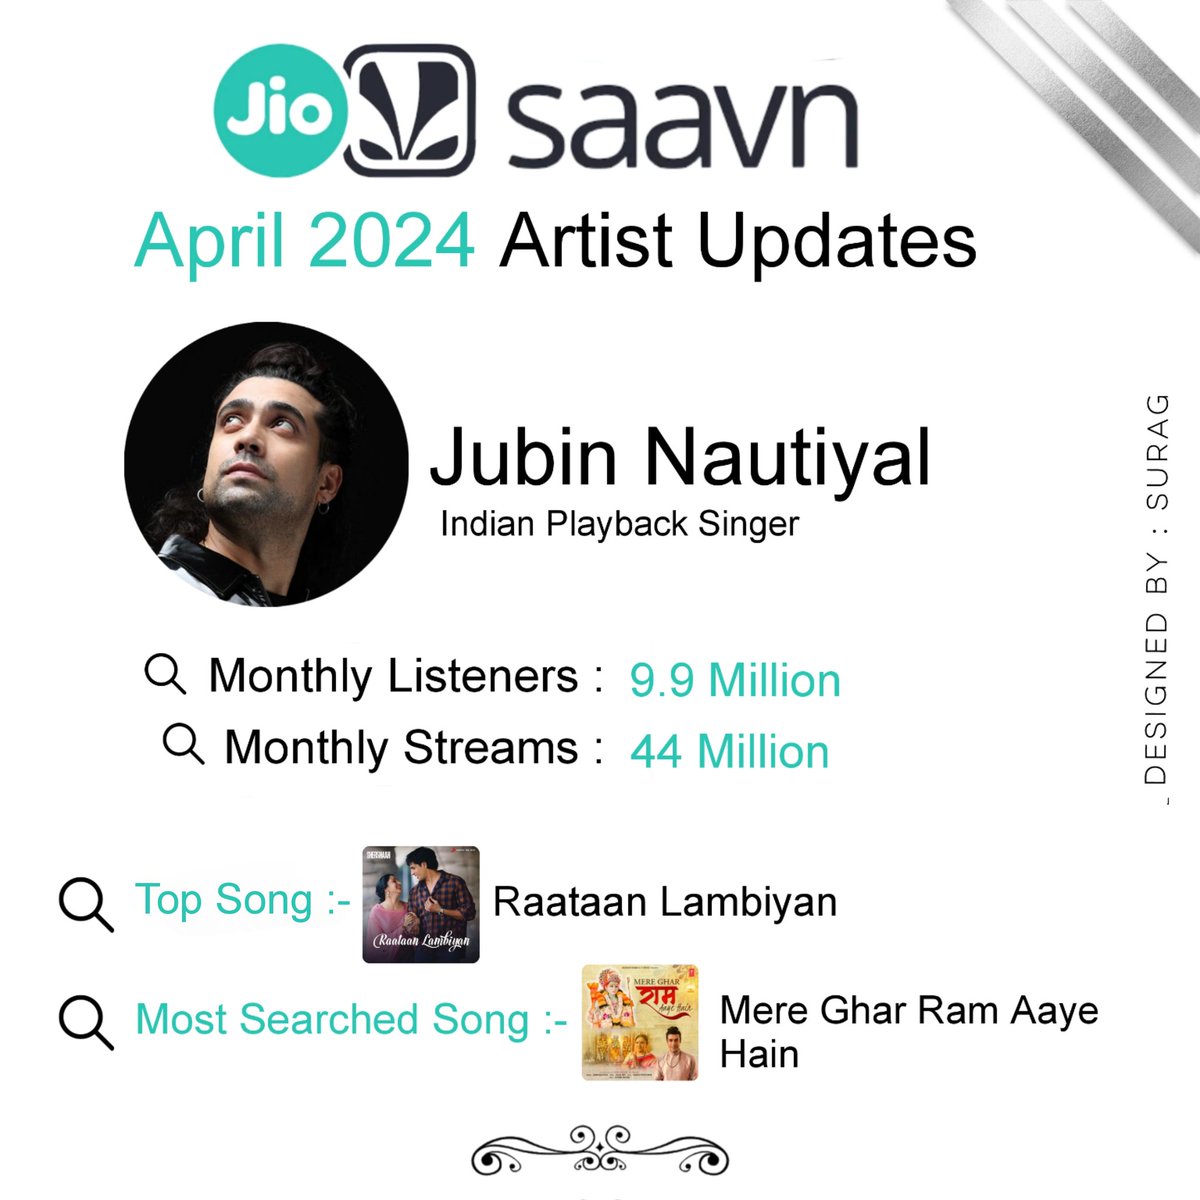 Our @JubinNautiyal's Artist Updates On Jiosaavn in April 2024! 🩵✨️

𝙈𝙤𝙣𝙩𝙝𝙡𝙮 𝙇𝙞𝙨𝙩𝙚𝙣𝙚𝙧𝙨 :- 9.9 Million
𝙈𝙤𝙣𝙩𝙝𝙡𝙮 𝙎𝙩𝙧𝙚𝙖𝙢𝙨 :- 44 Million 
𝙏𝙤𝙥 𝙎𝙤𝙣𝙜 :- Raatan Lambiyan 
𝙈𝙤𝙨𝙩 𝙎𝙚𝙖𝙧𝙘𝙝𝙚𝙙 𝙎𝙤𝙣𝙜 :- Mere Ghar Ram Aaye Hain